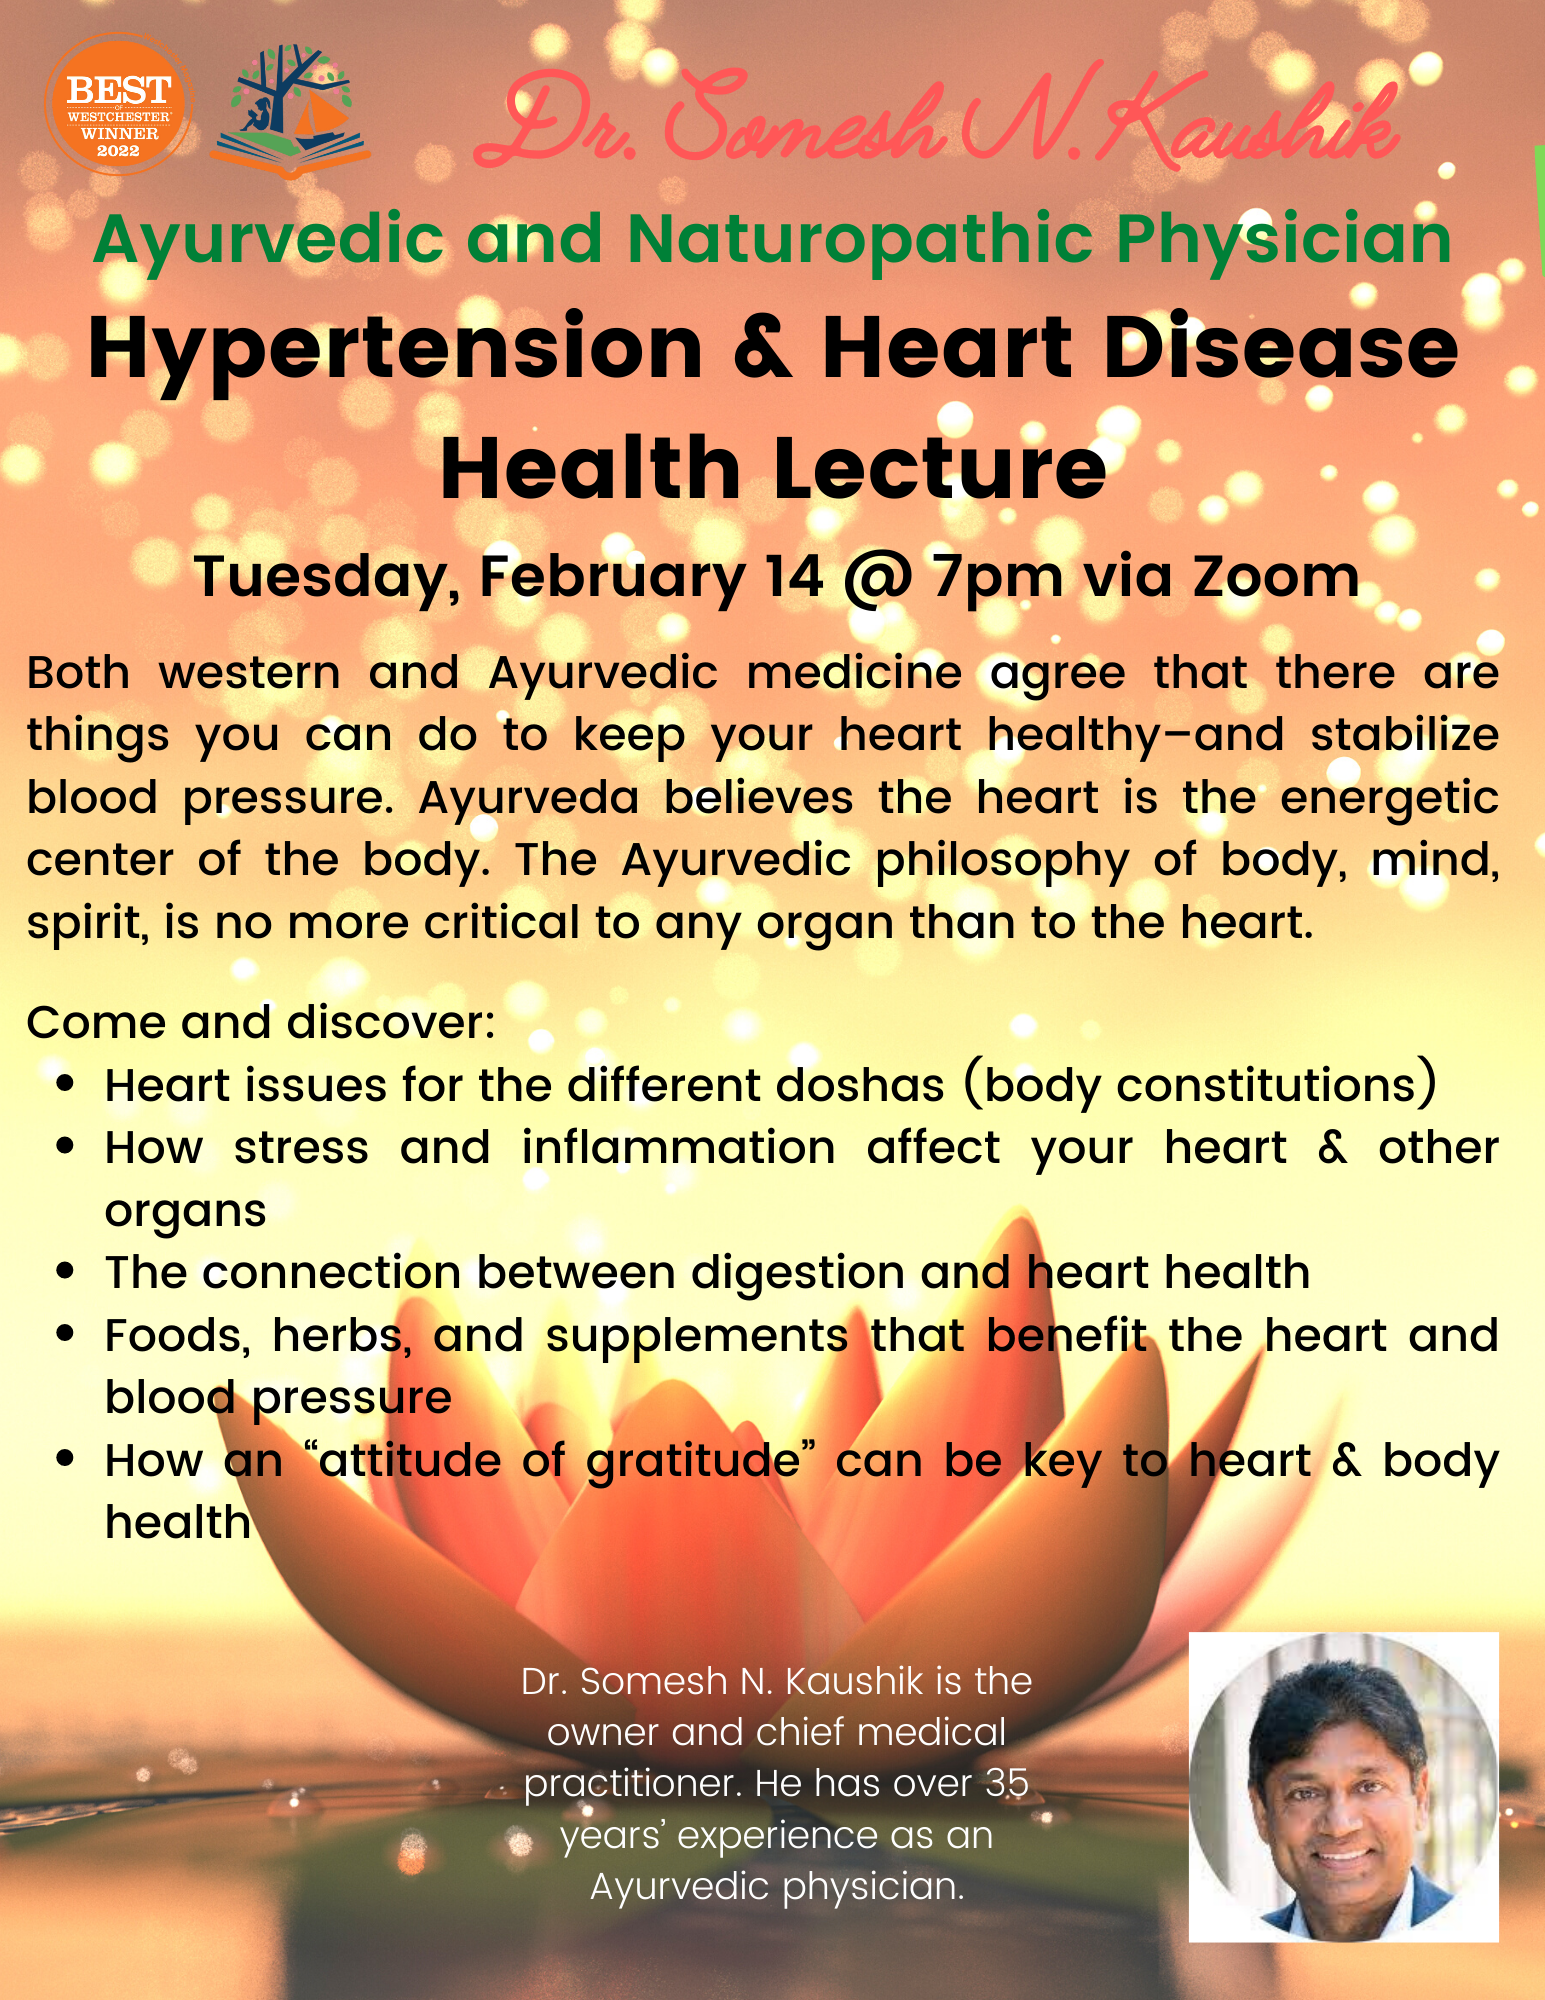 2/14 via zoom @ 7pm: Hypertension & Heart Disease lecture